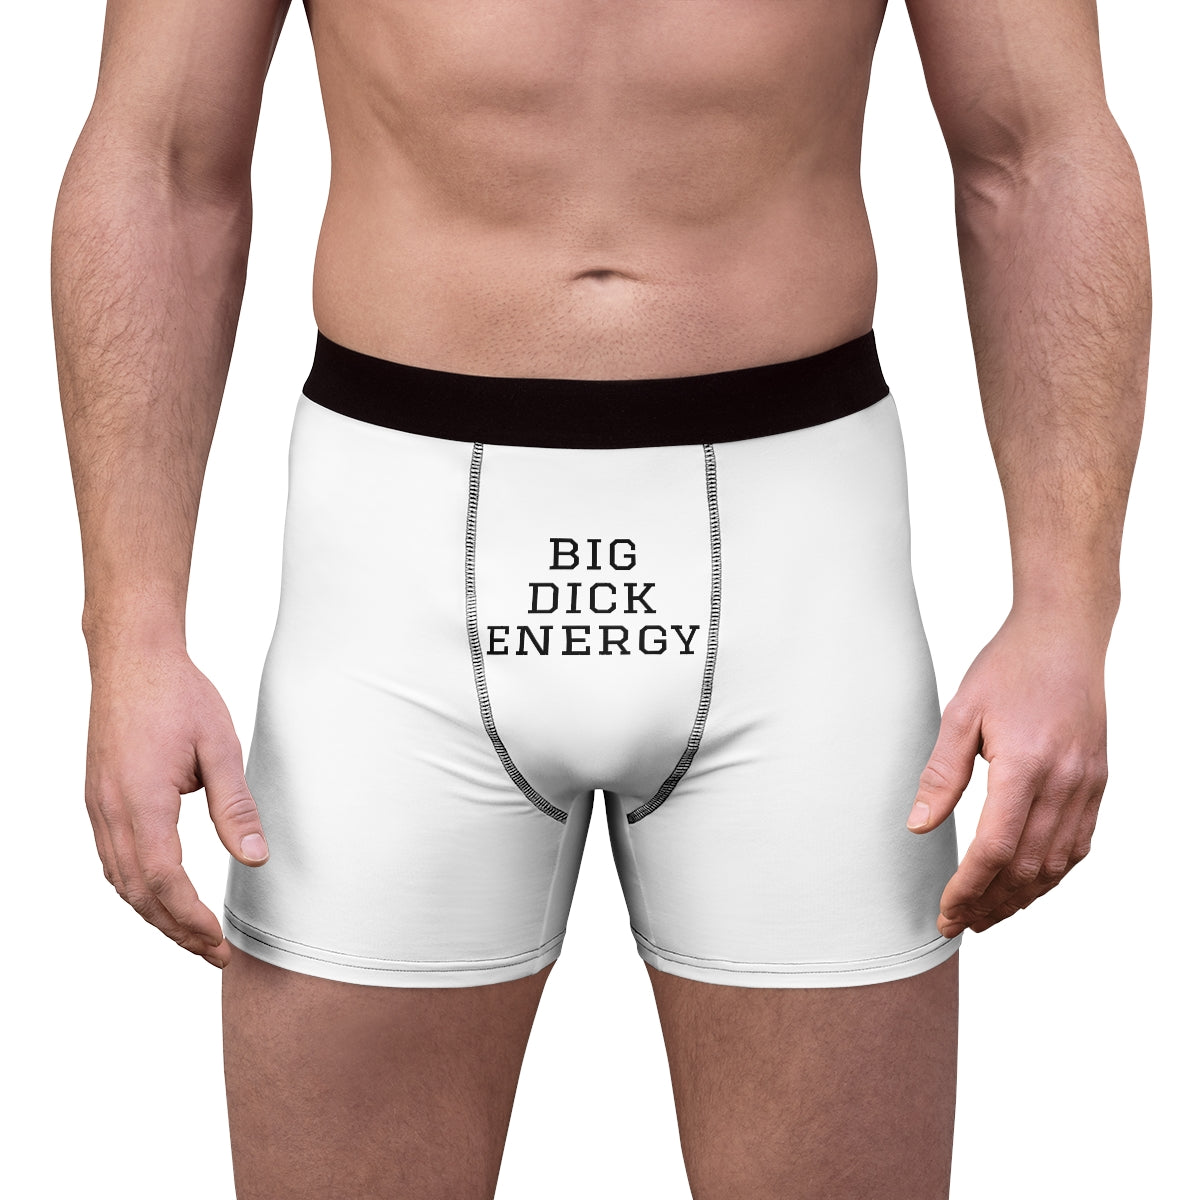 angel h perez add photo underwear for men with big dicks